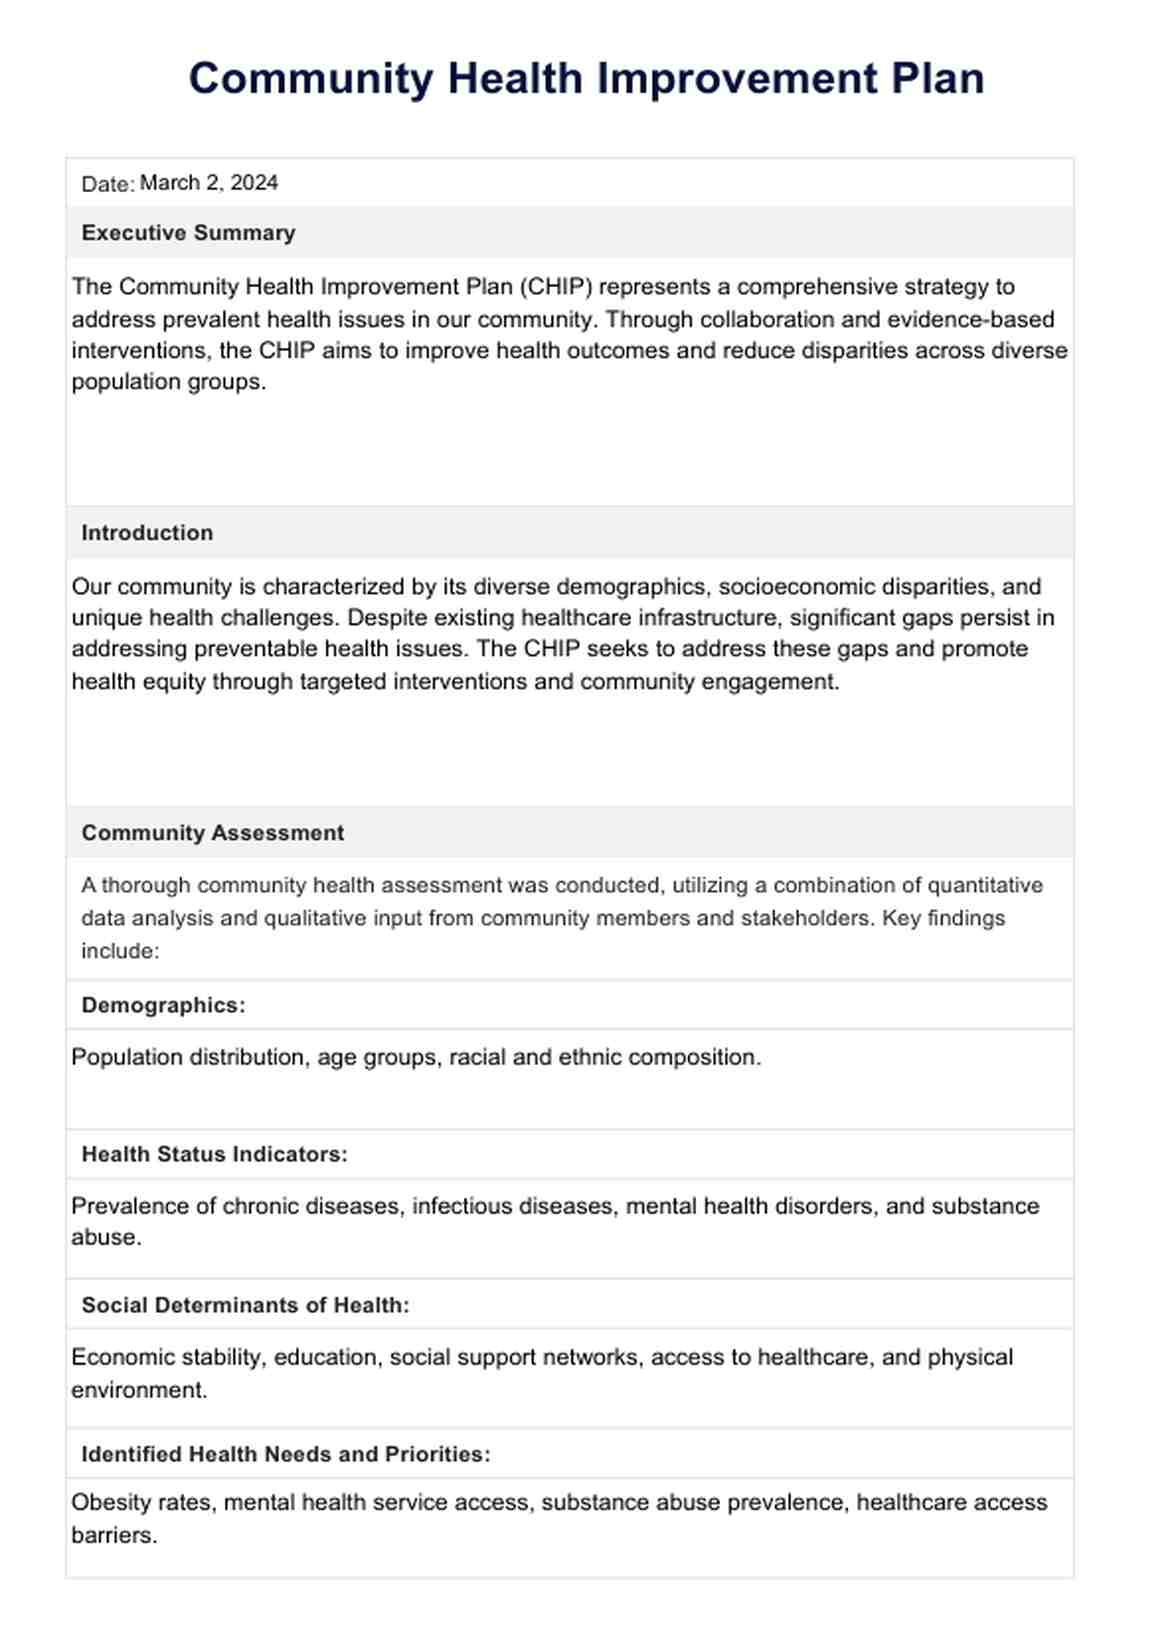 Community Health Improvement Plan PDF Example